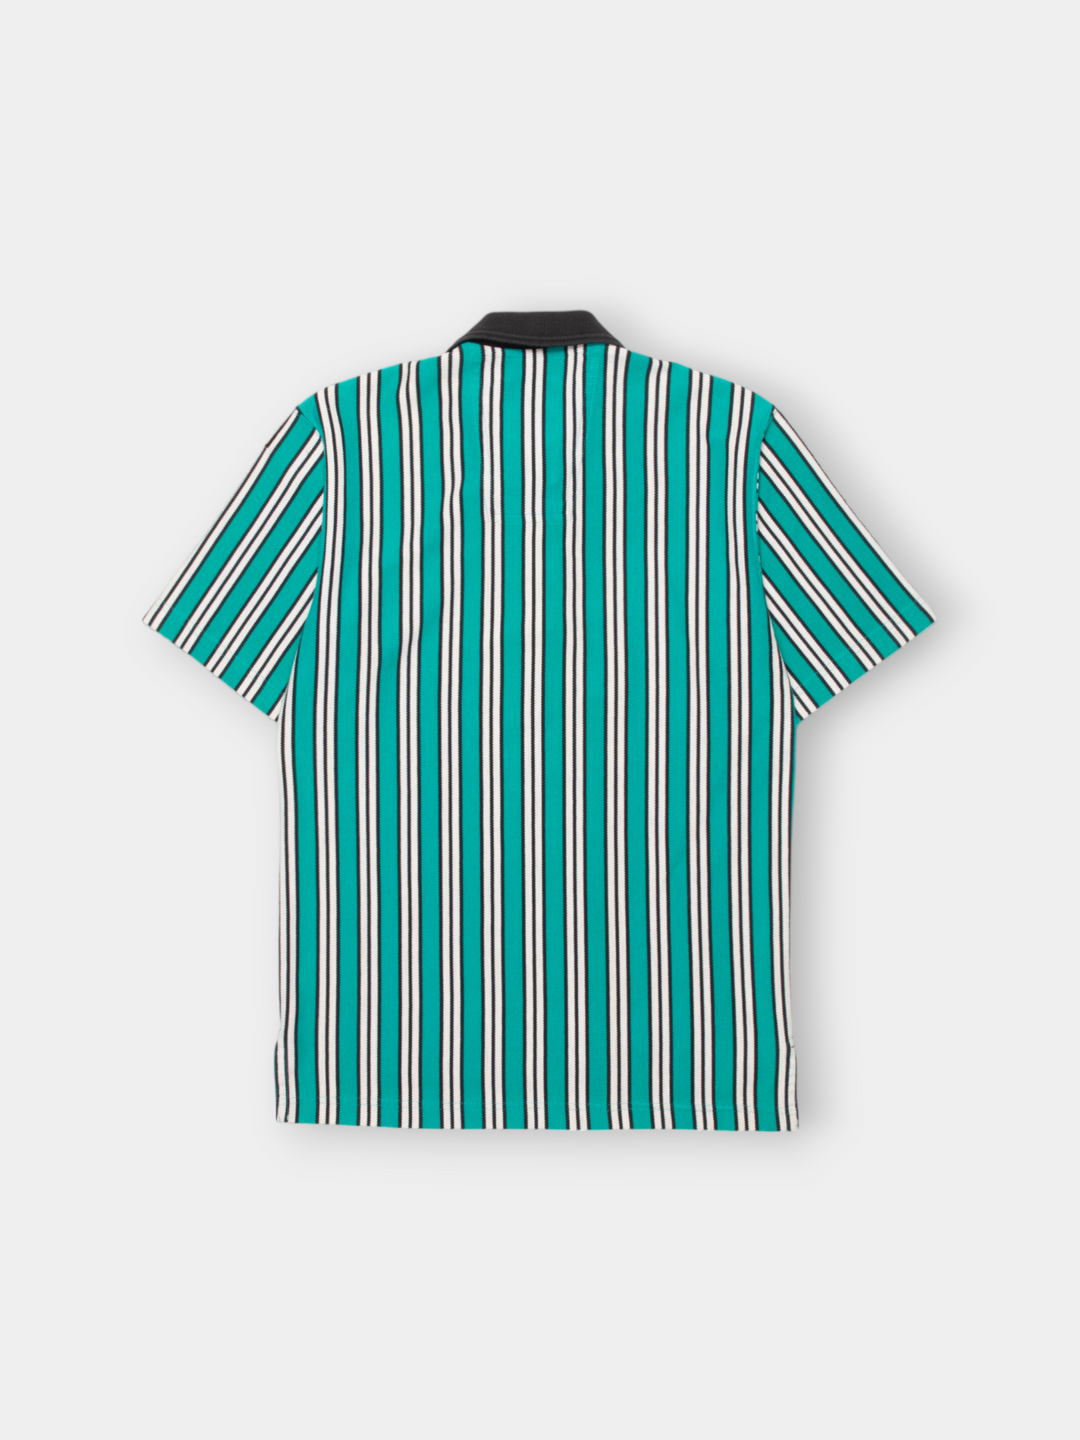 90s Adidas Equipment Striped Polo Shirt (S)